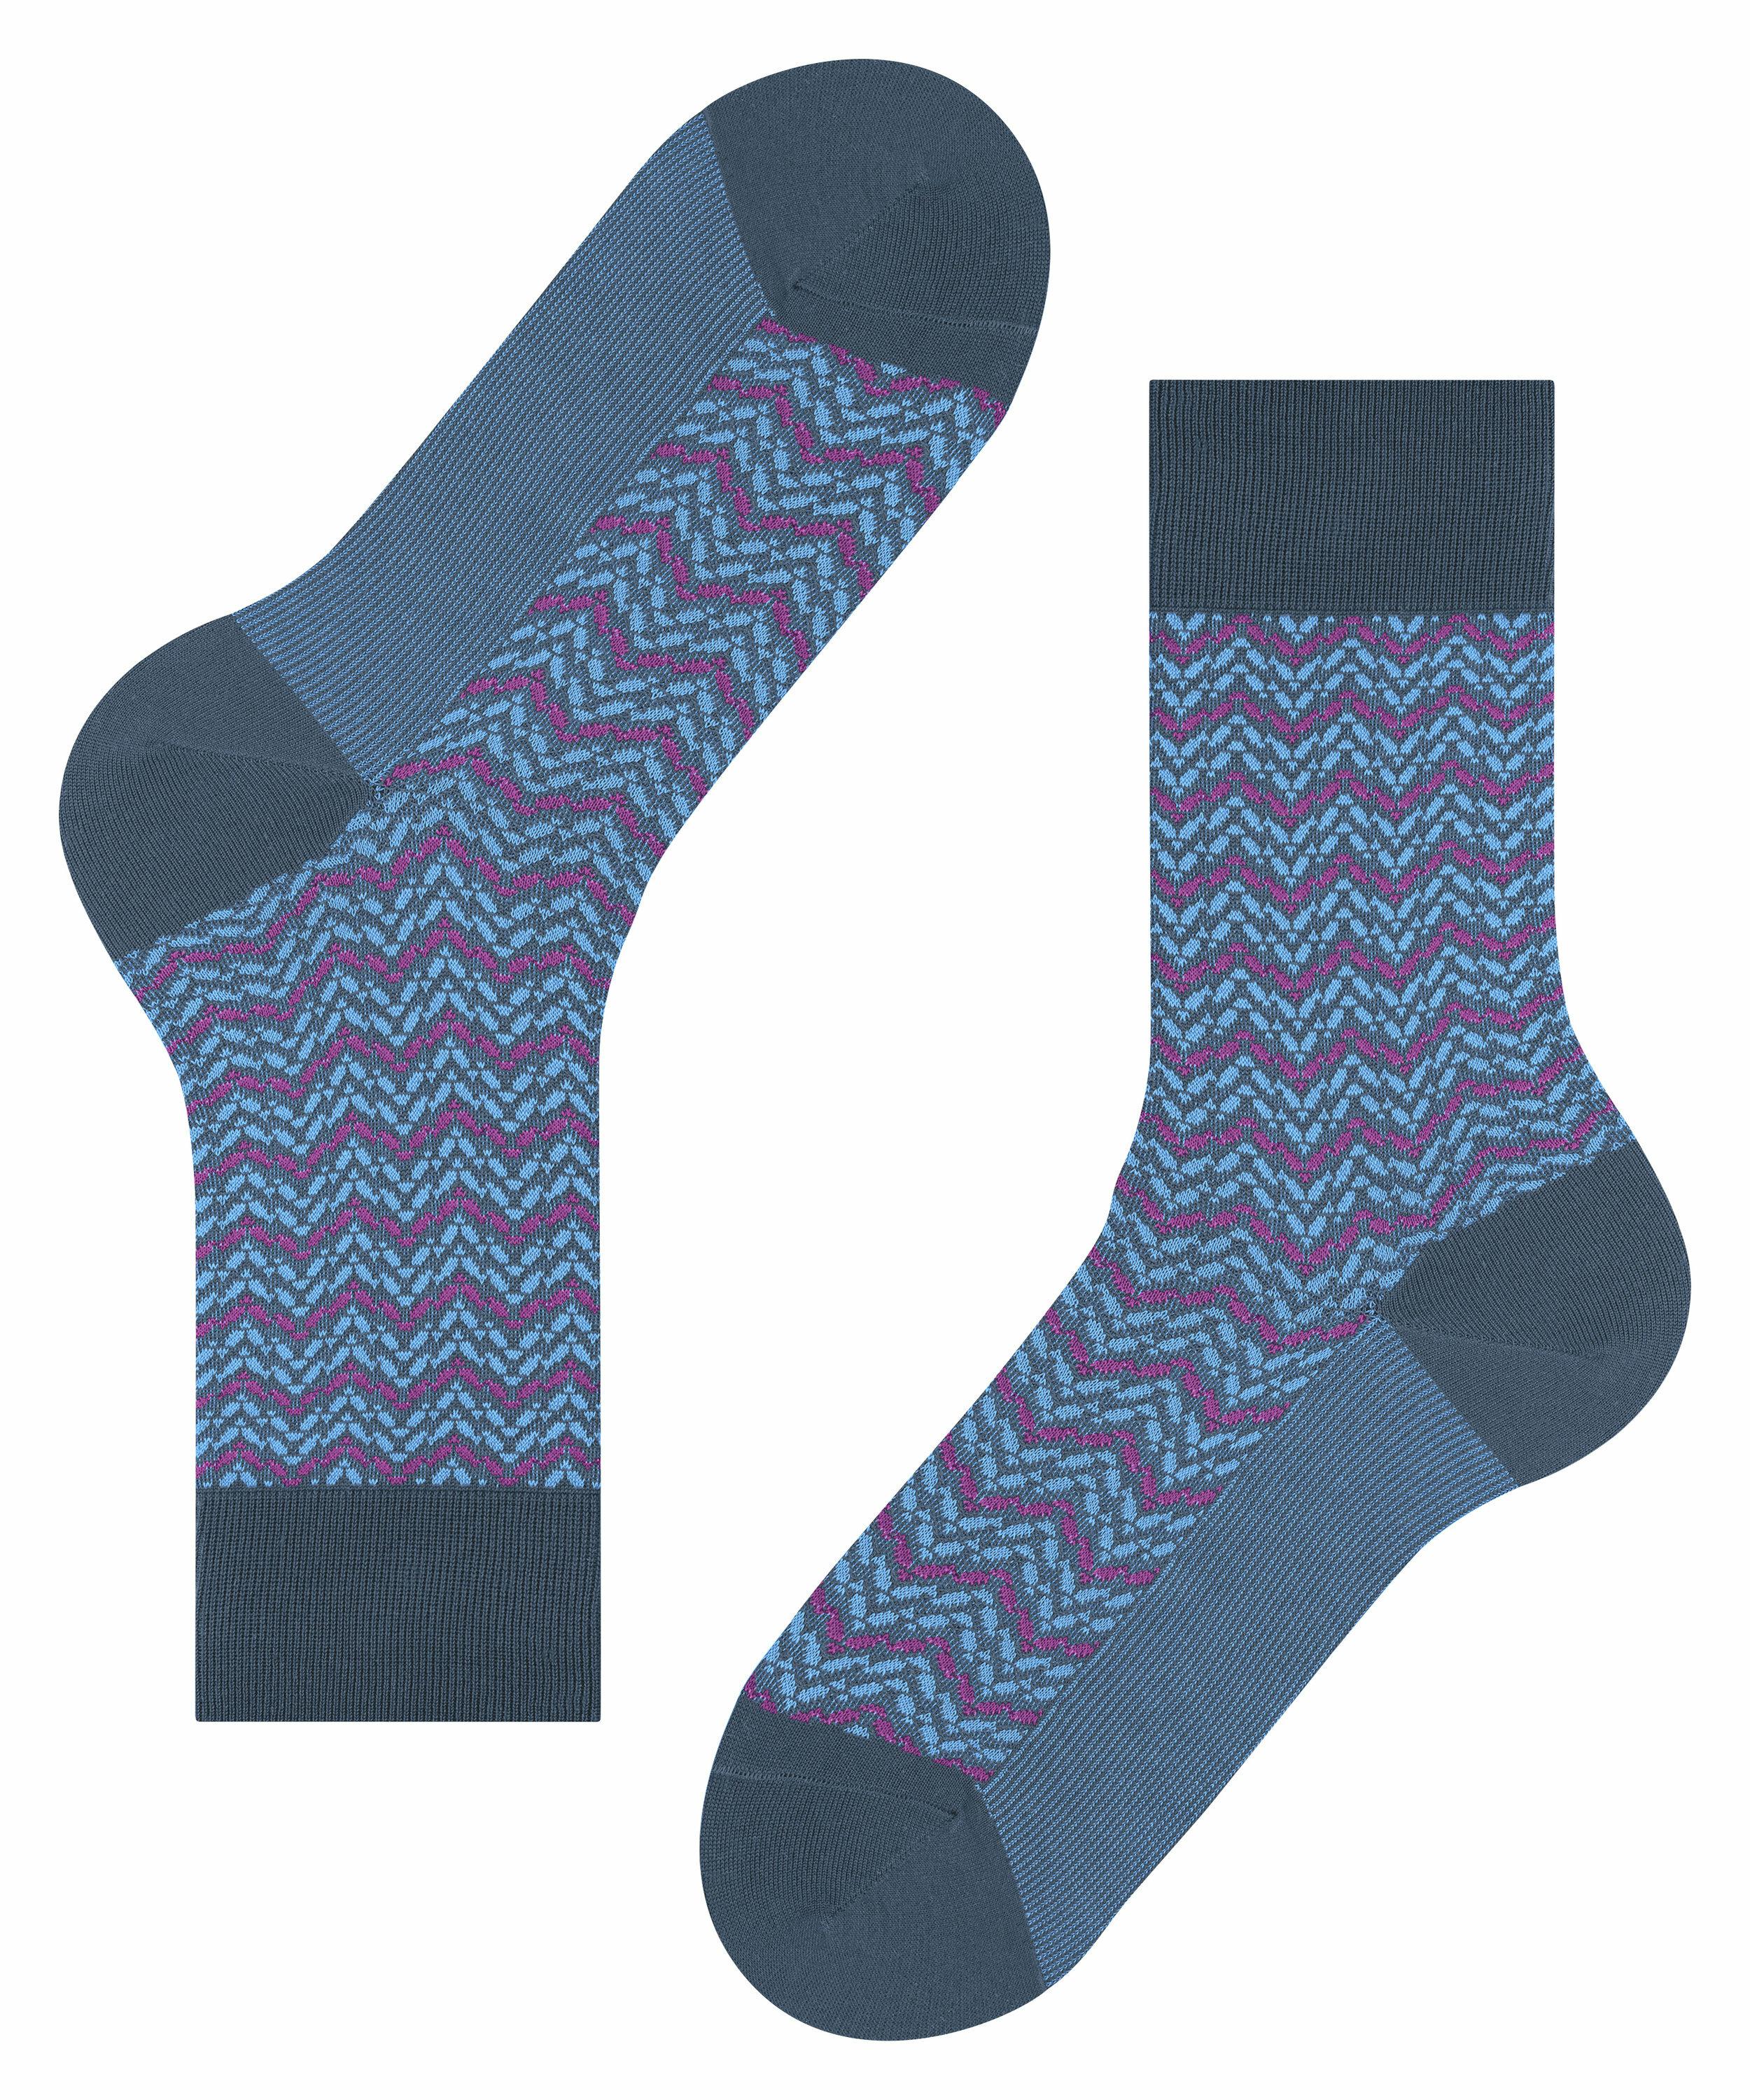 FALKE Colour Waves Herren Socken, 41-42, Blau, AnderesMuster, Baumwolle, 12 günstig online kaufen